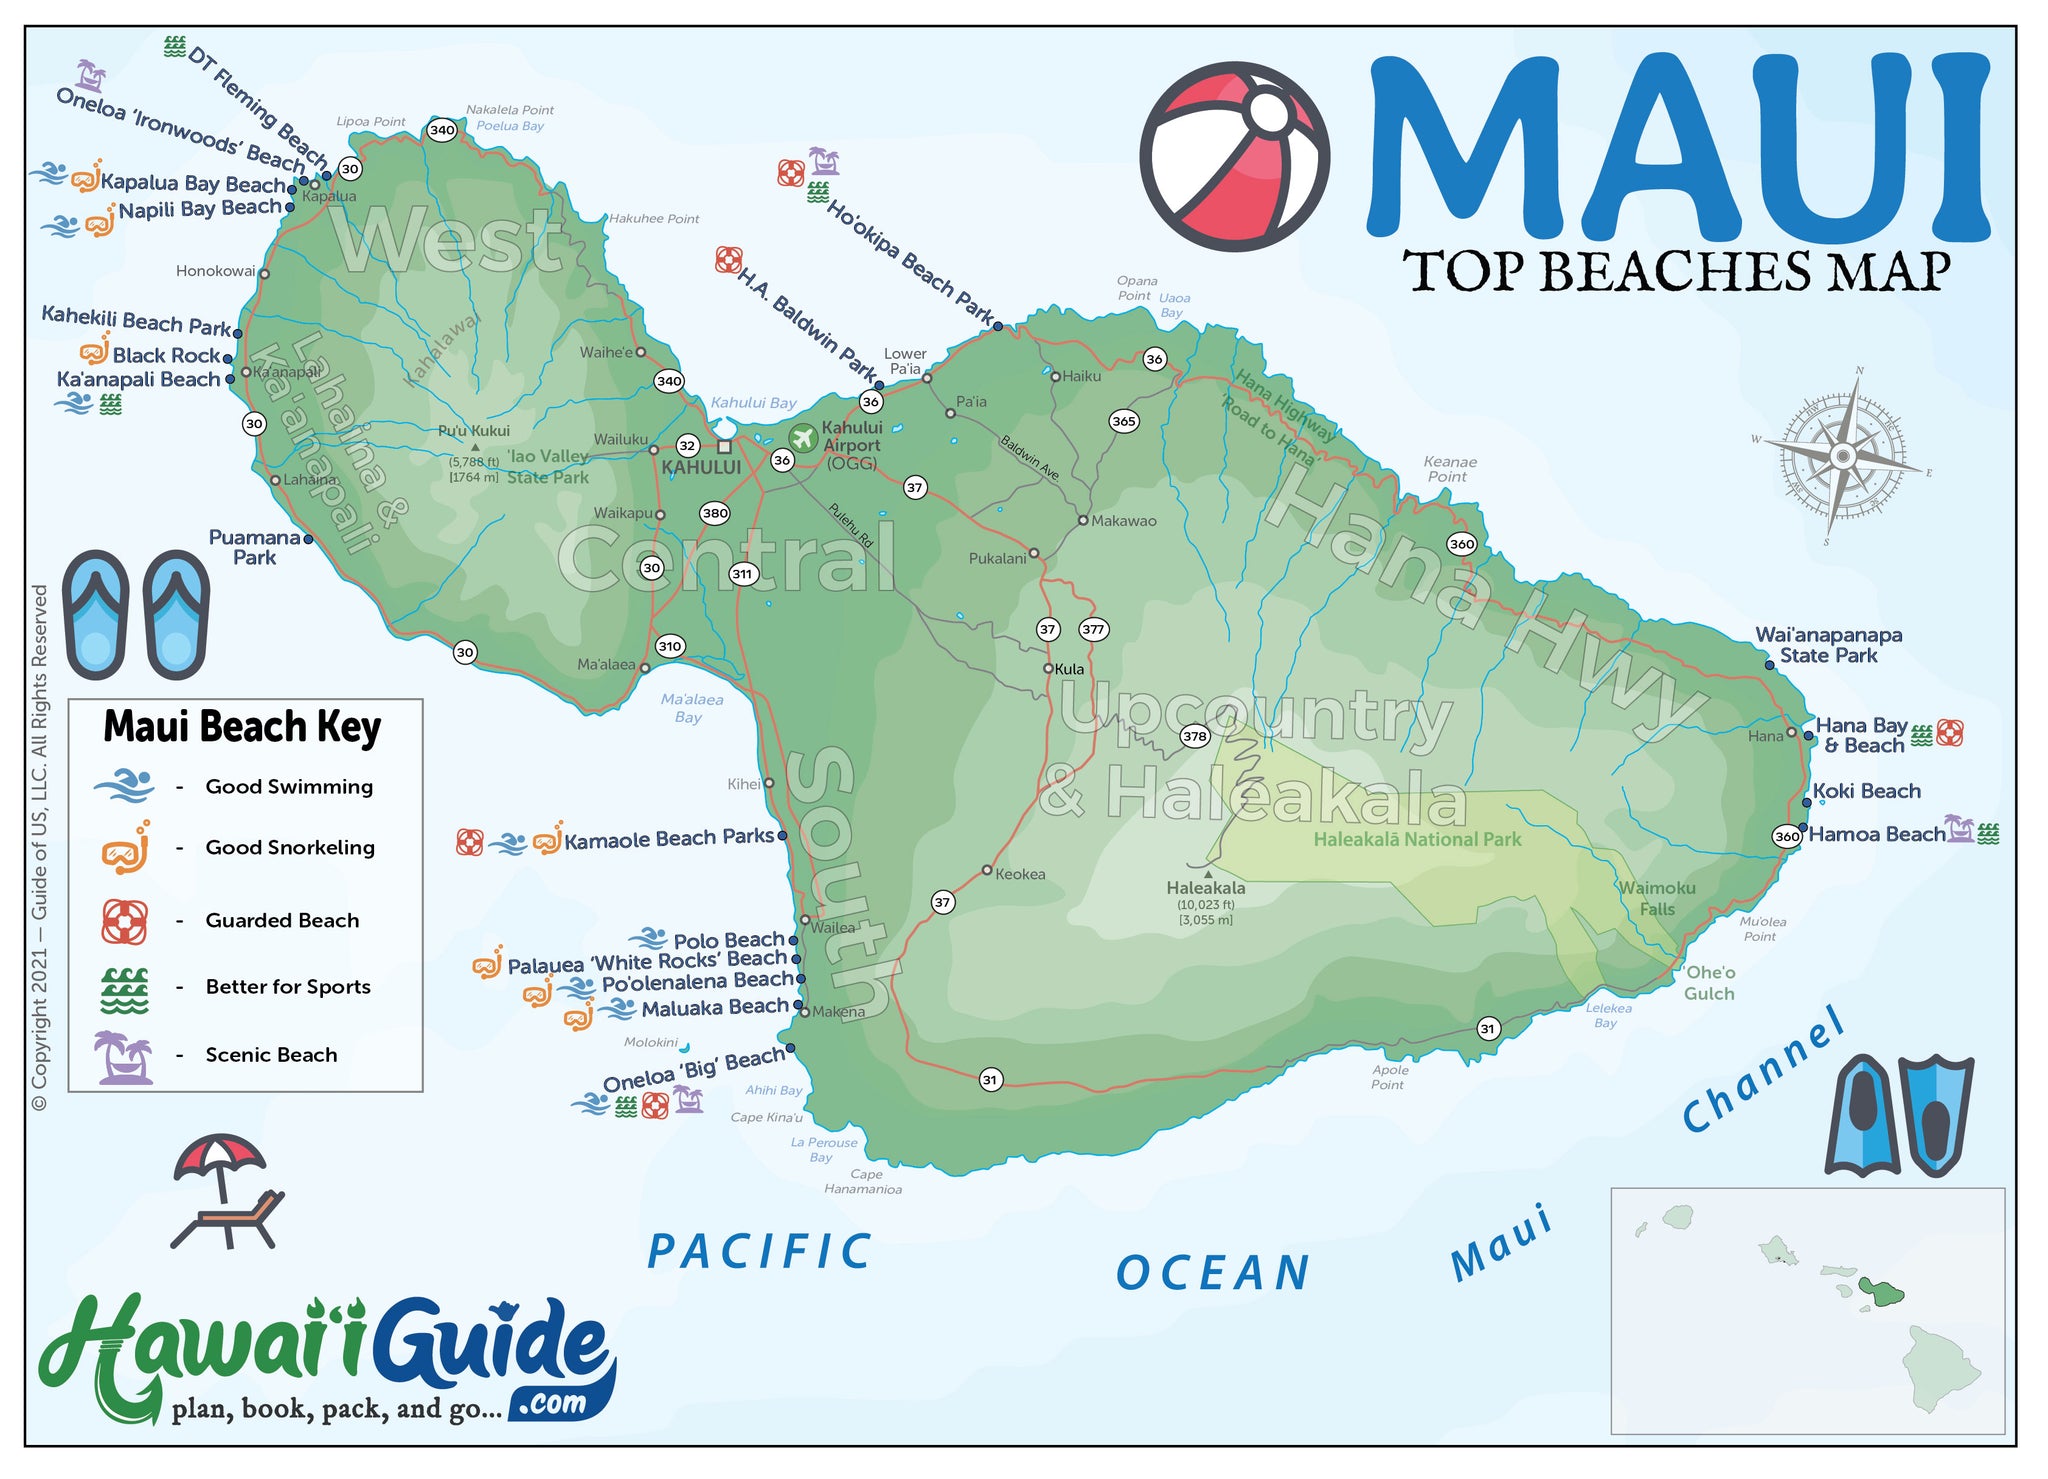 Hawaii Guide Maui Beaches Map V6 1024x1024@2x ?v=1672724912